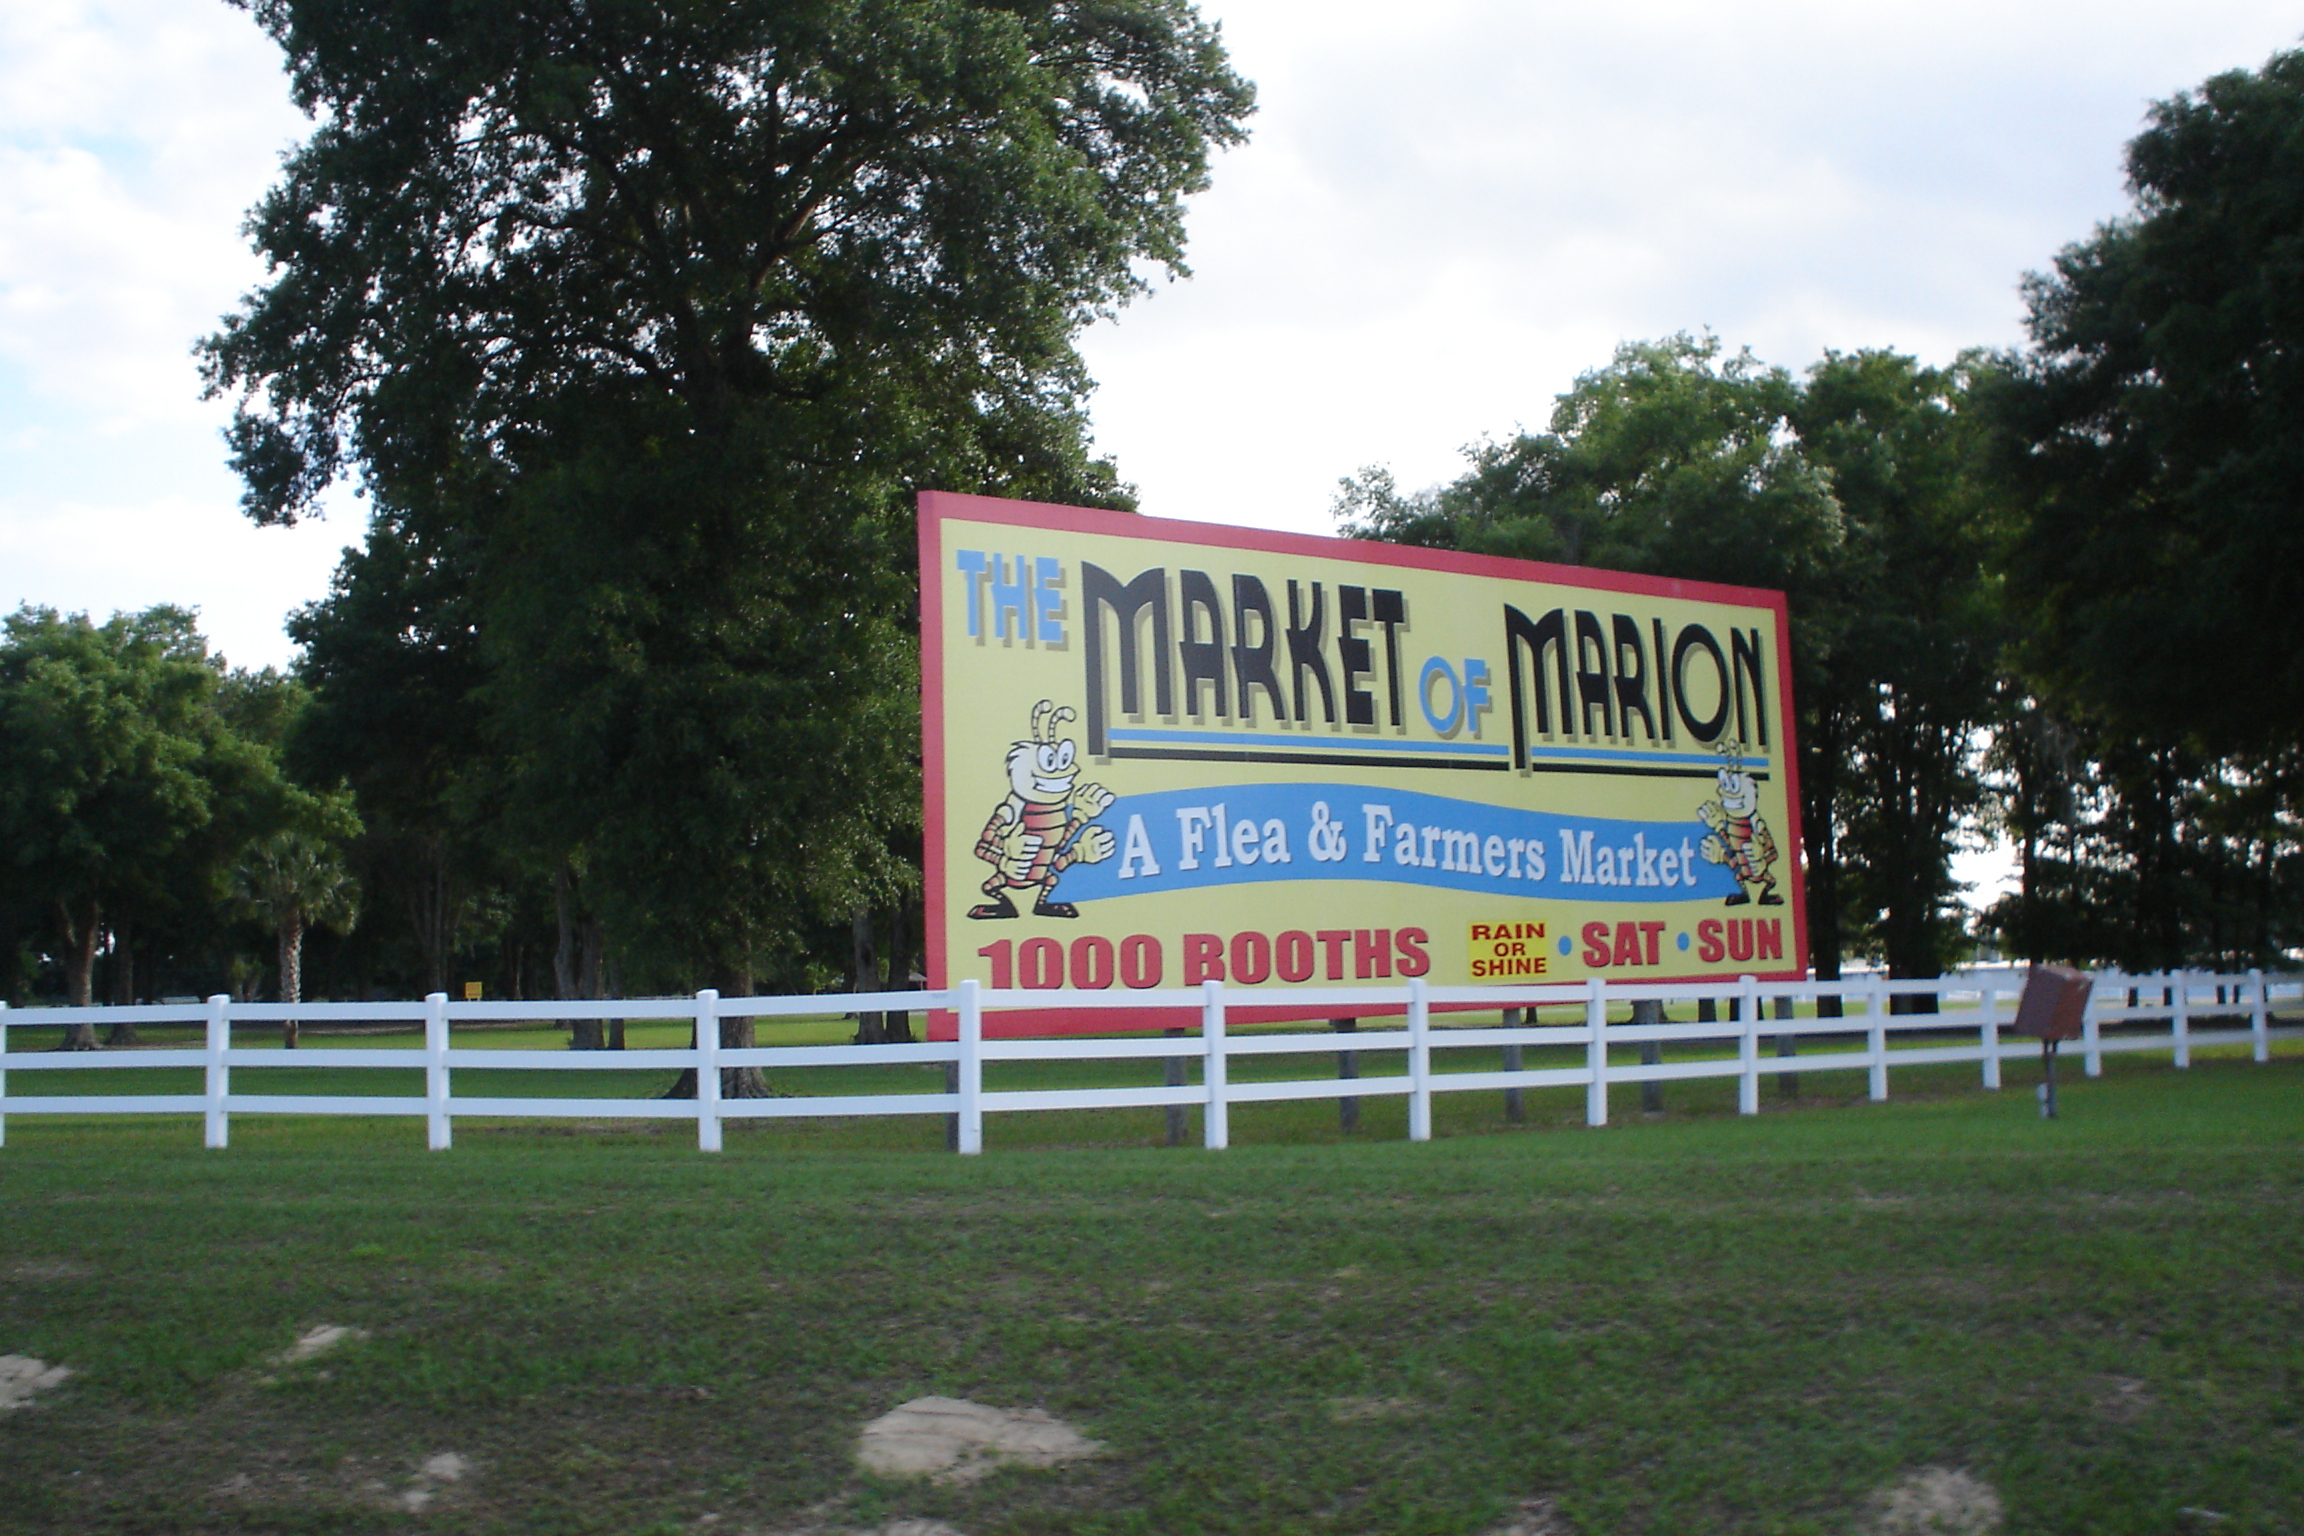 Market of marion photo